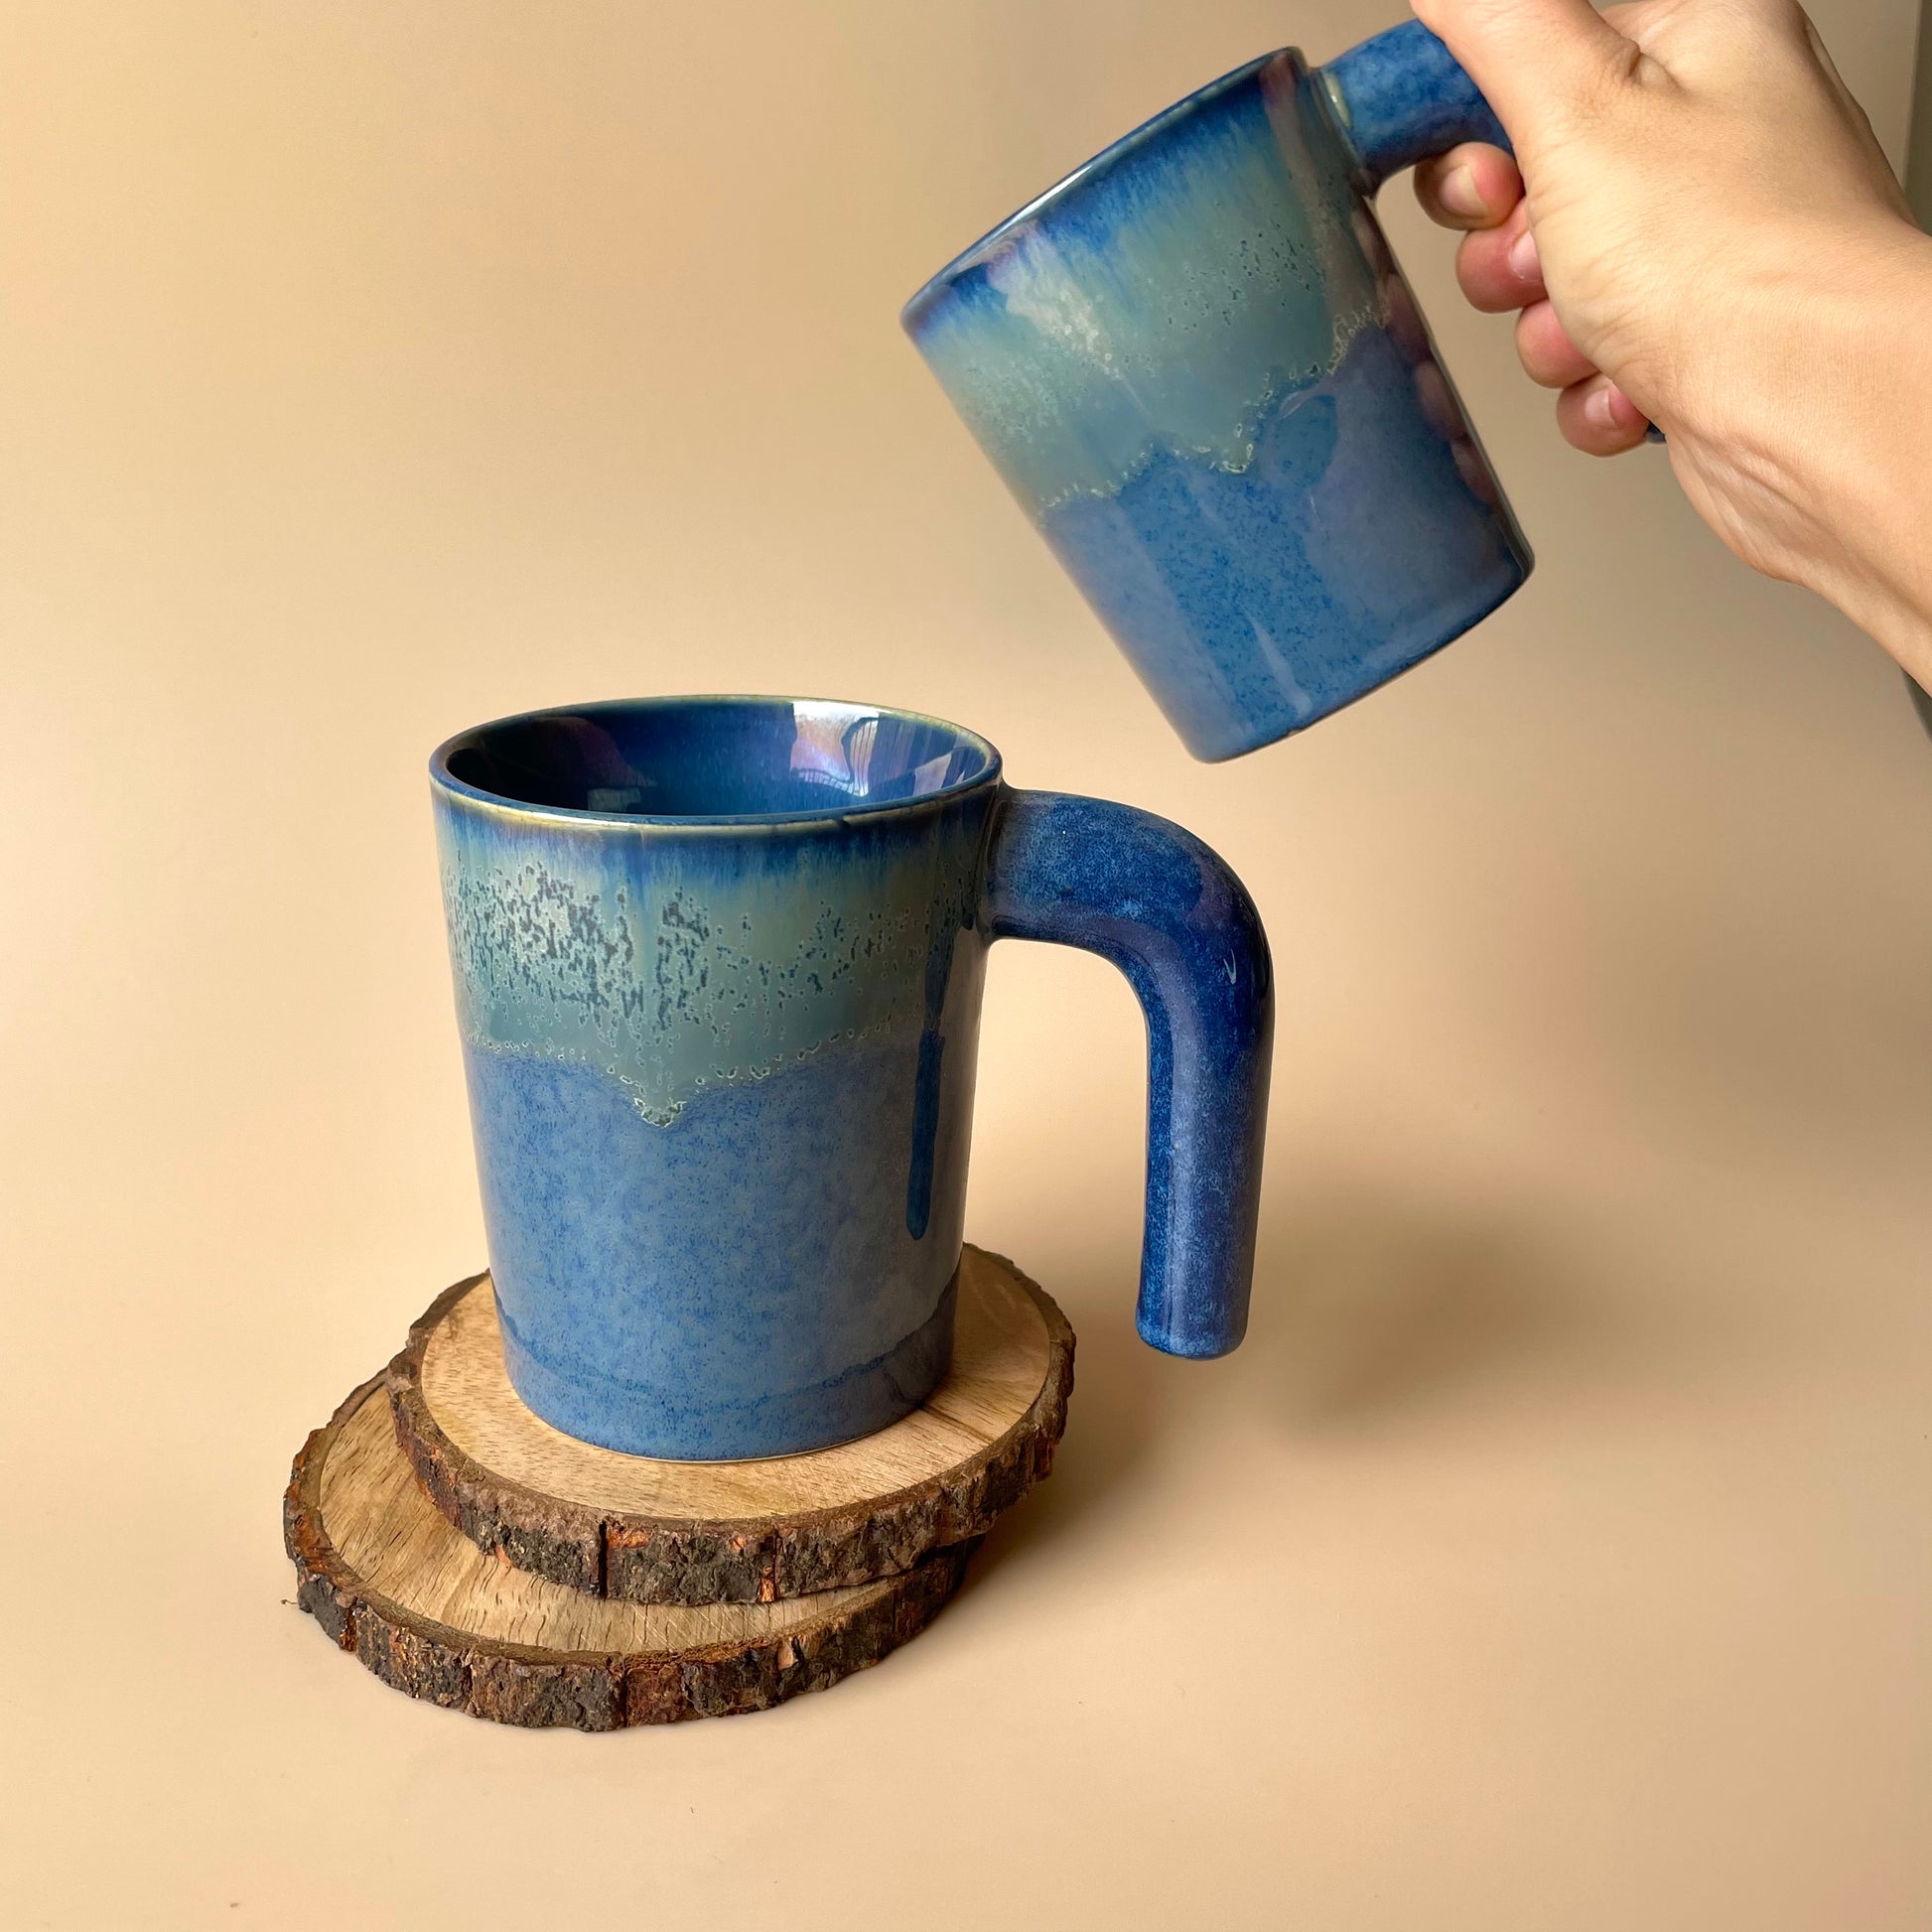 Buy Blue waves coffee mug with open handle Online